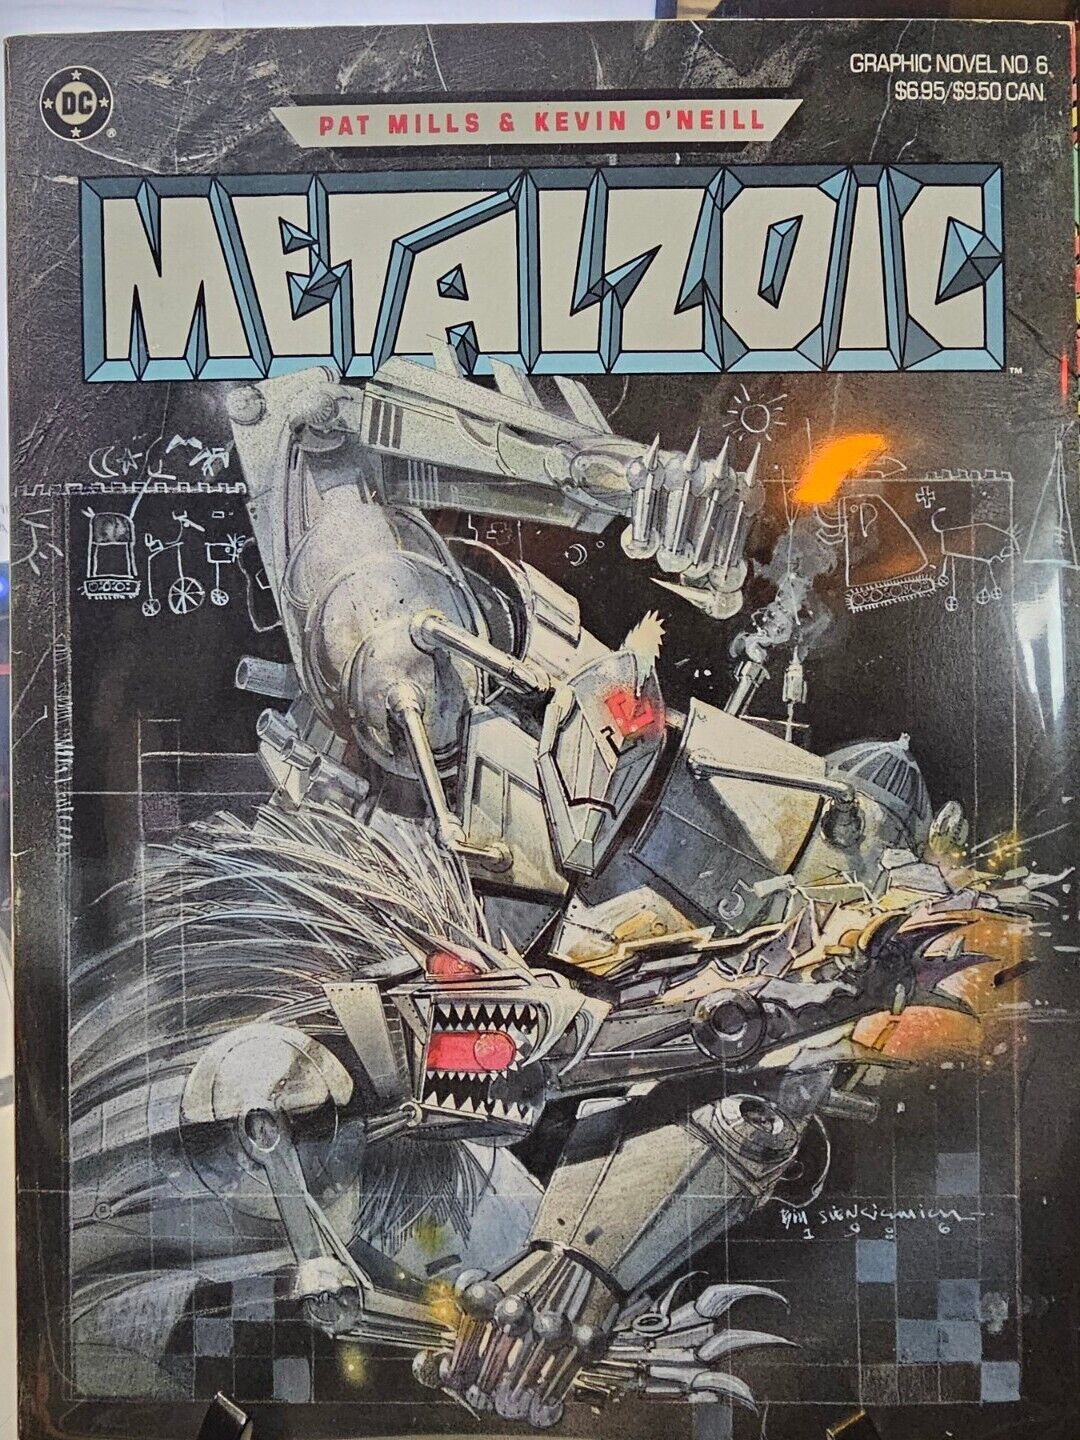 Metalzoic DC comics Graphic Novel #6 